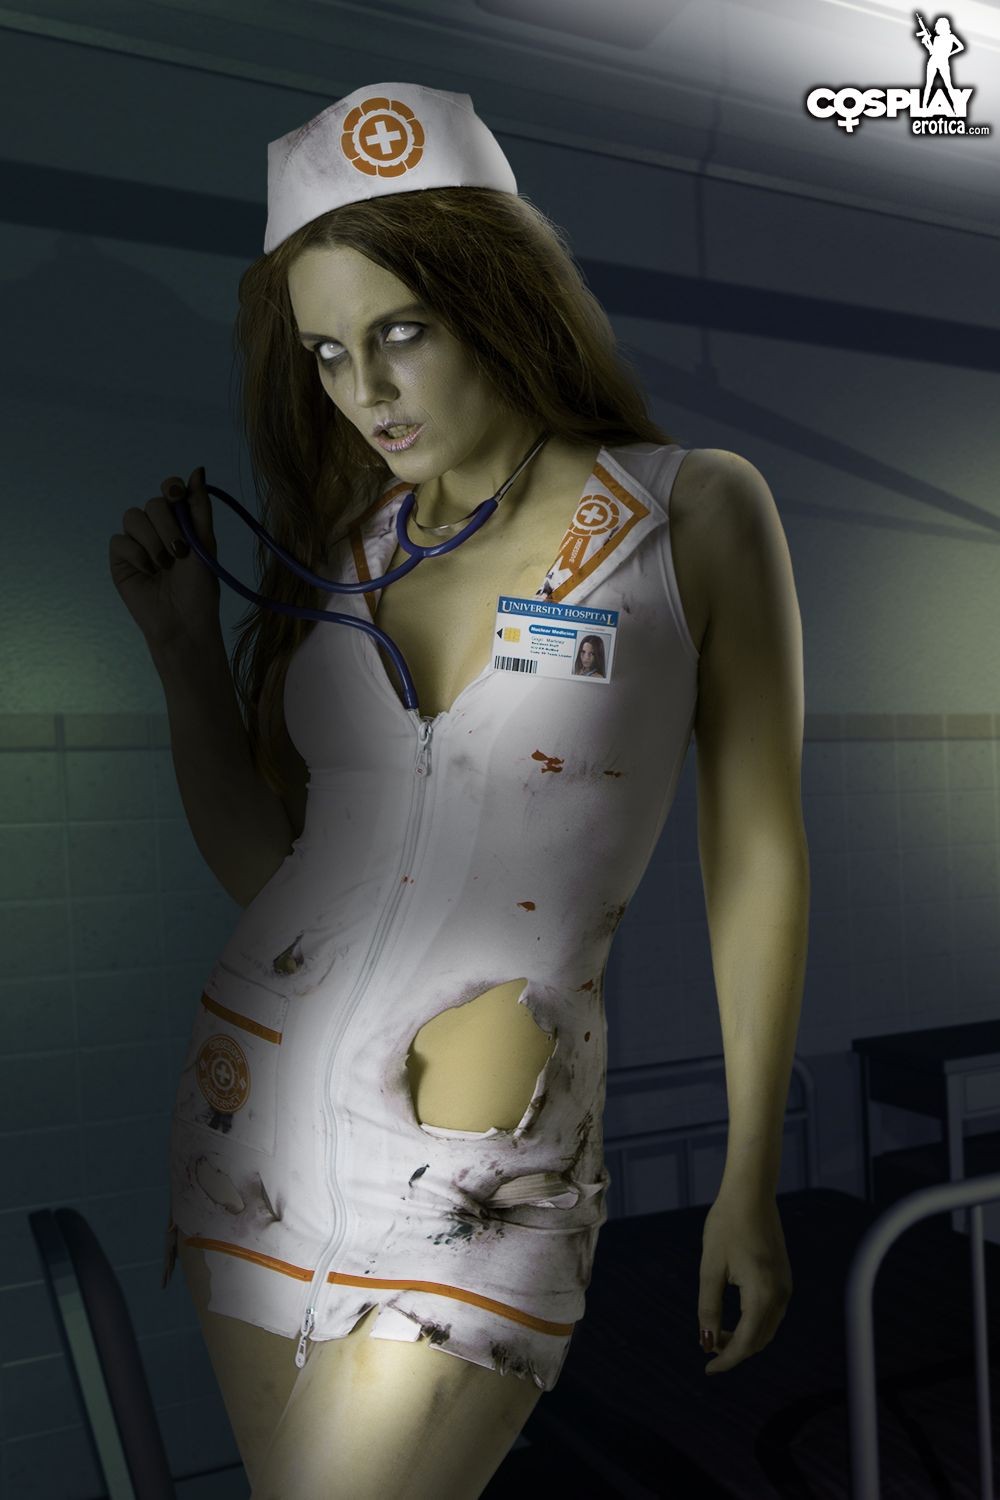 Cosplay featuring Walking Dead zombie in nurse uniform naked #73223919